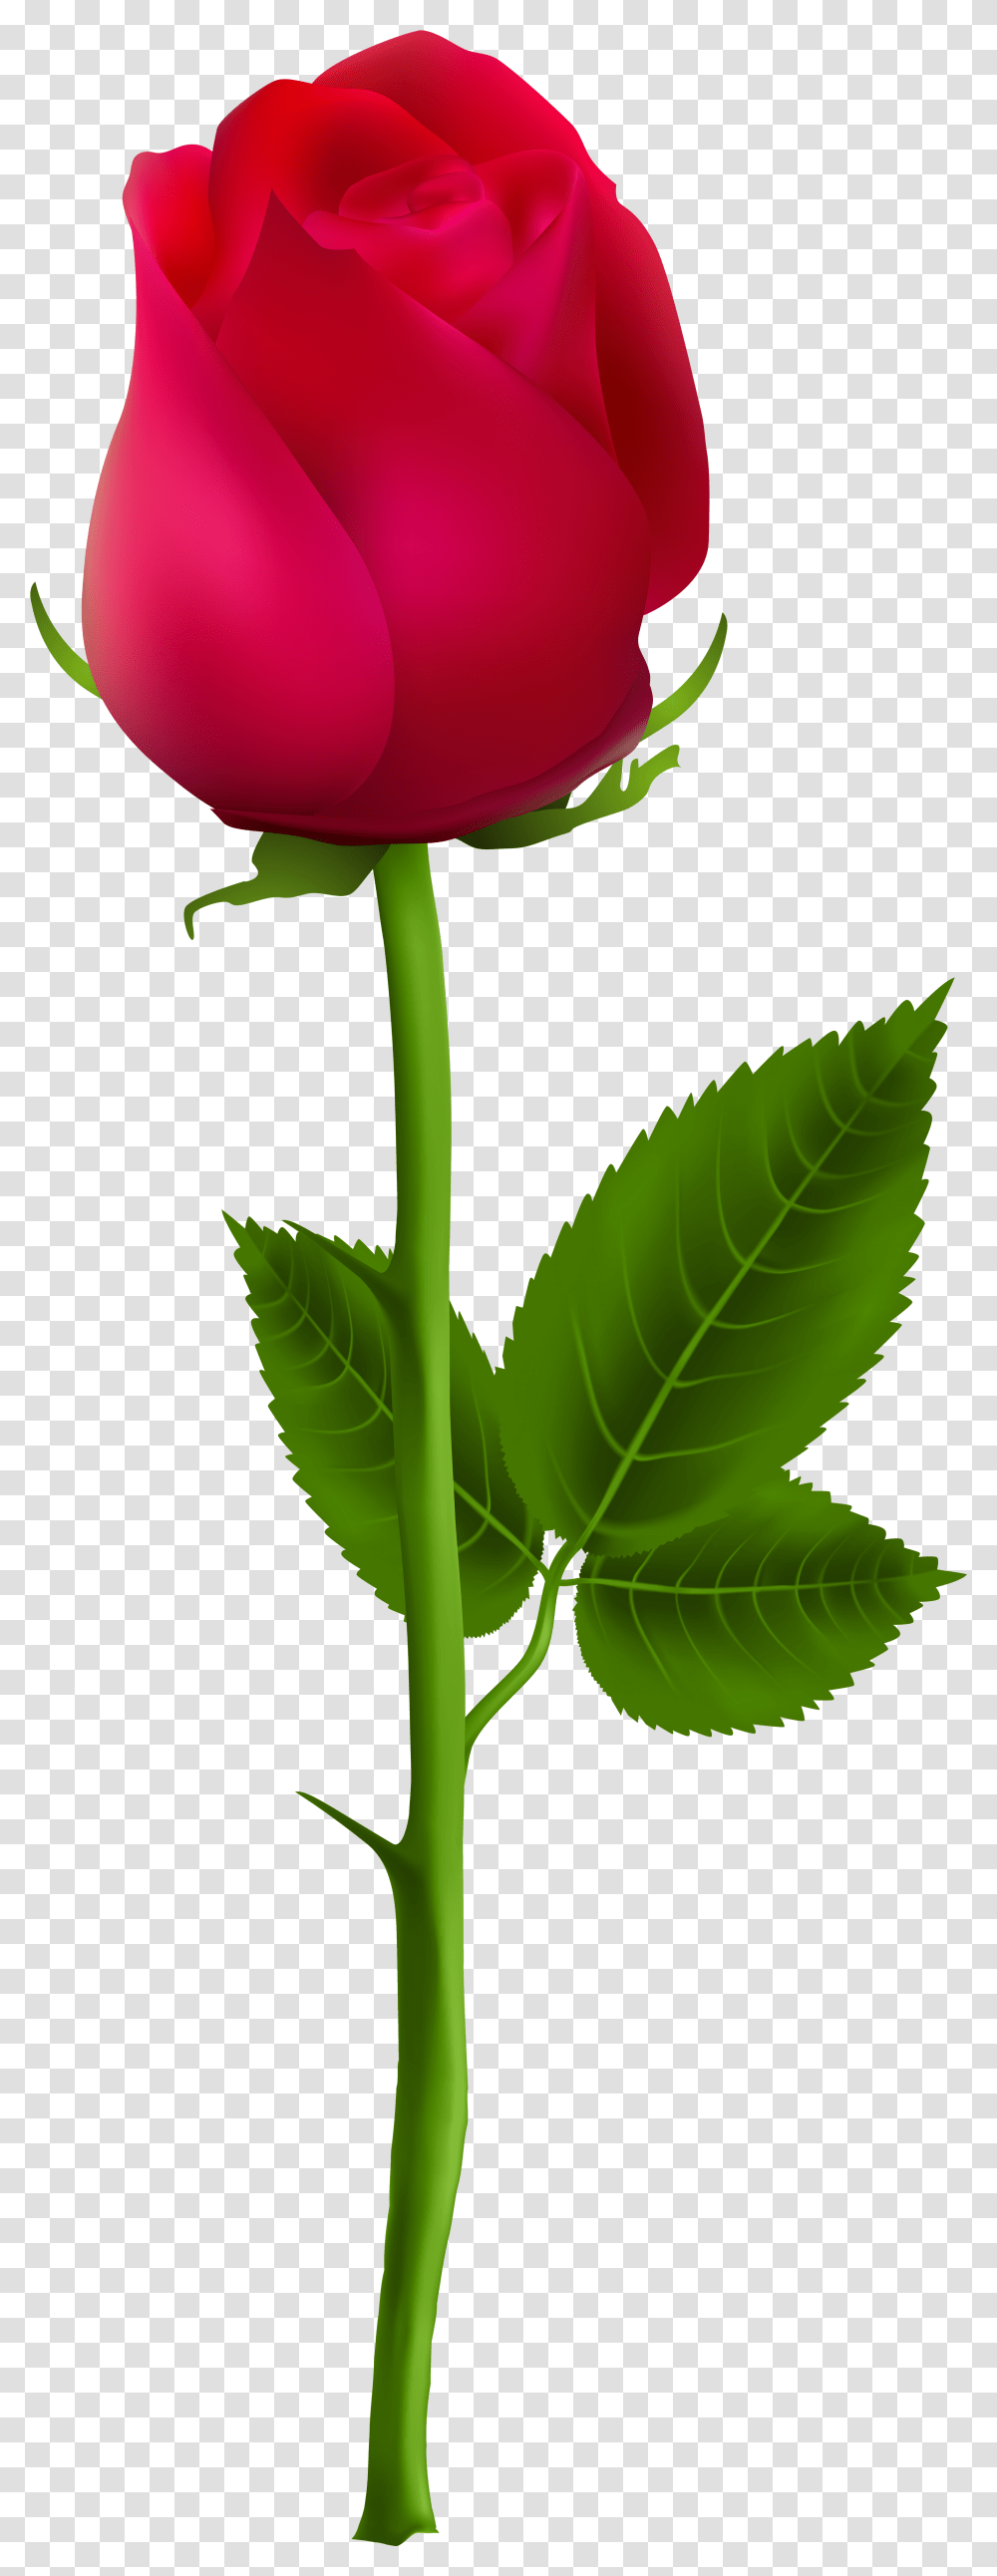 Rose Stem Graphic Beautiful Rose Single Flower, Leaf, Plant, Blossom, Petal Transparent Png